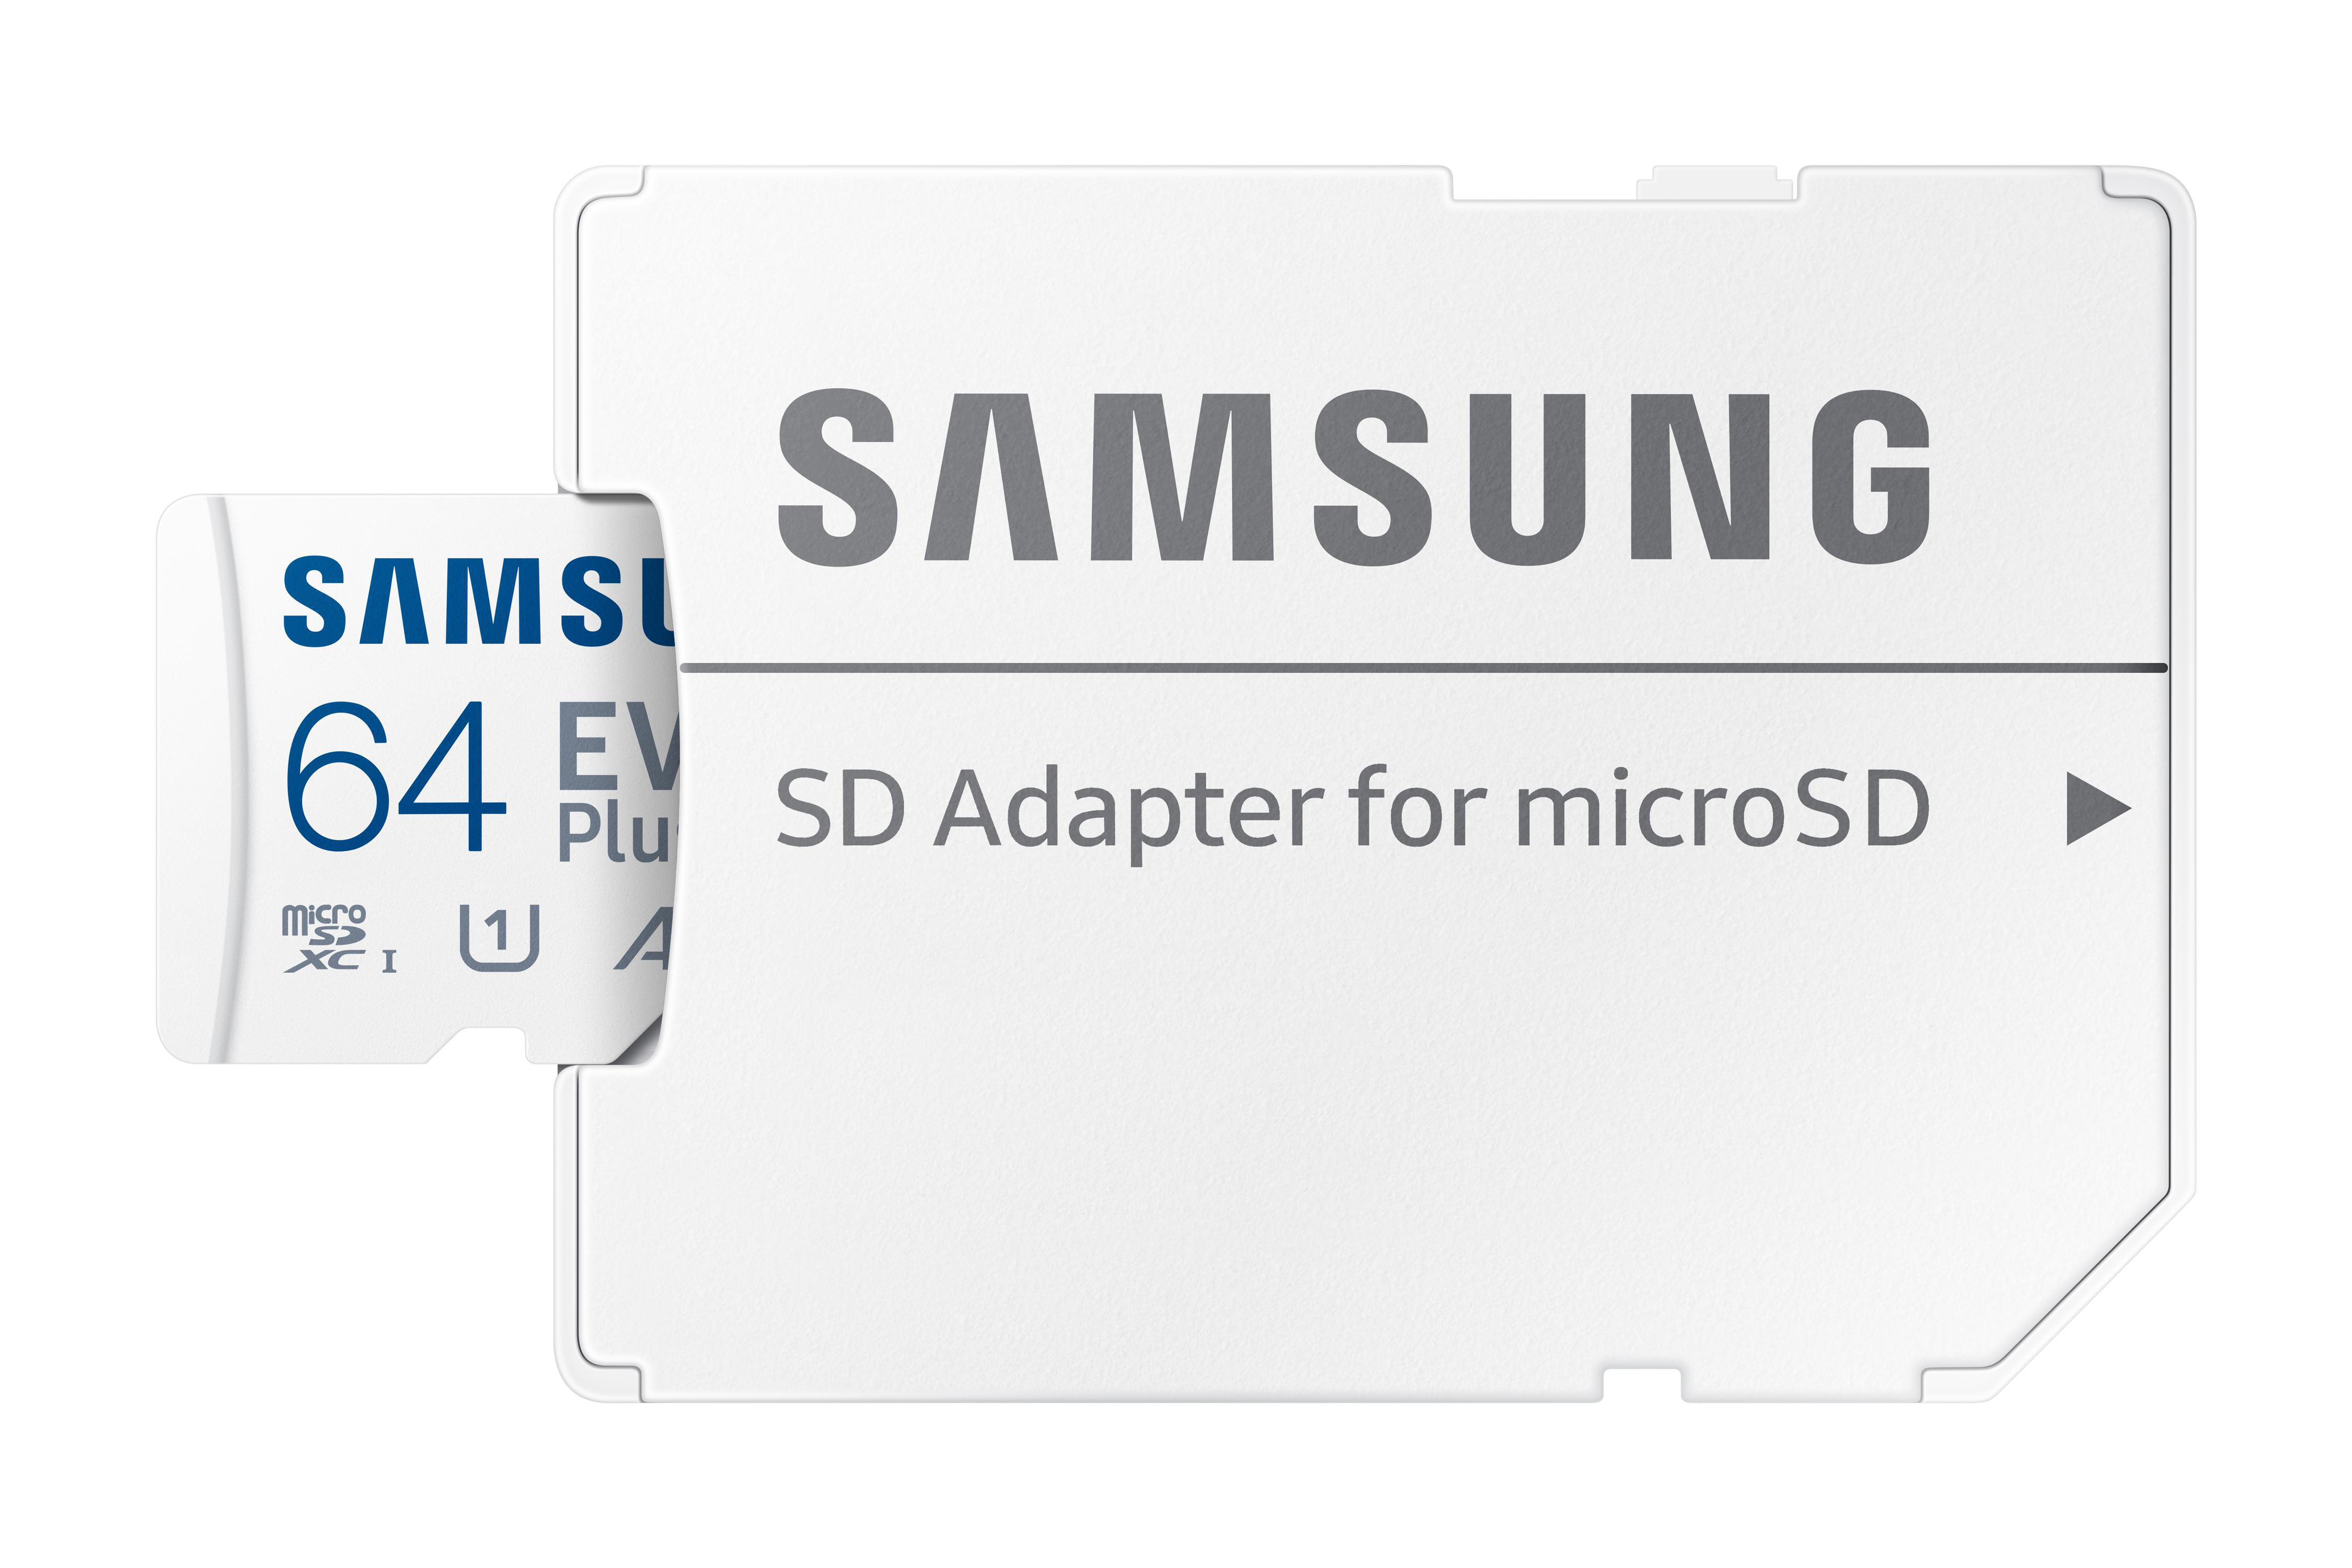 SAMSUNG GB, Plus, EVO Speicherkarte, Micro-SDXC 64 MB/s 130